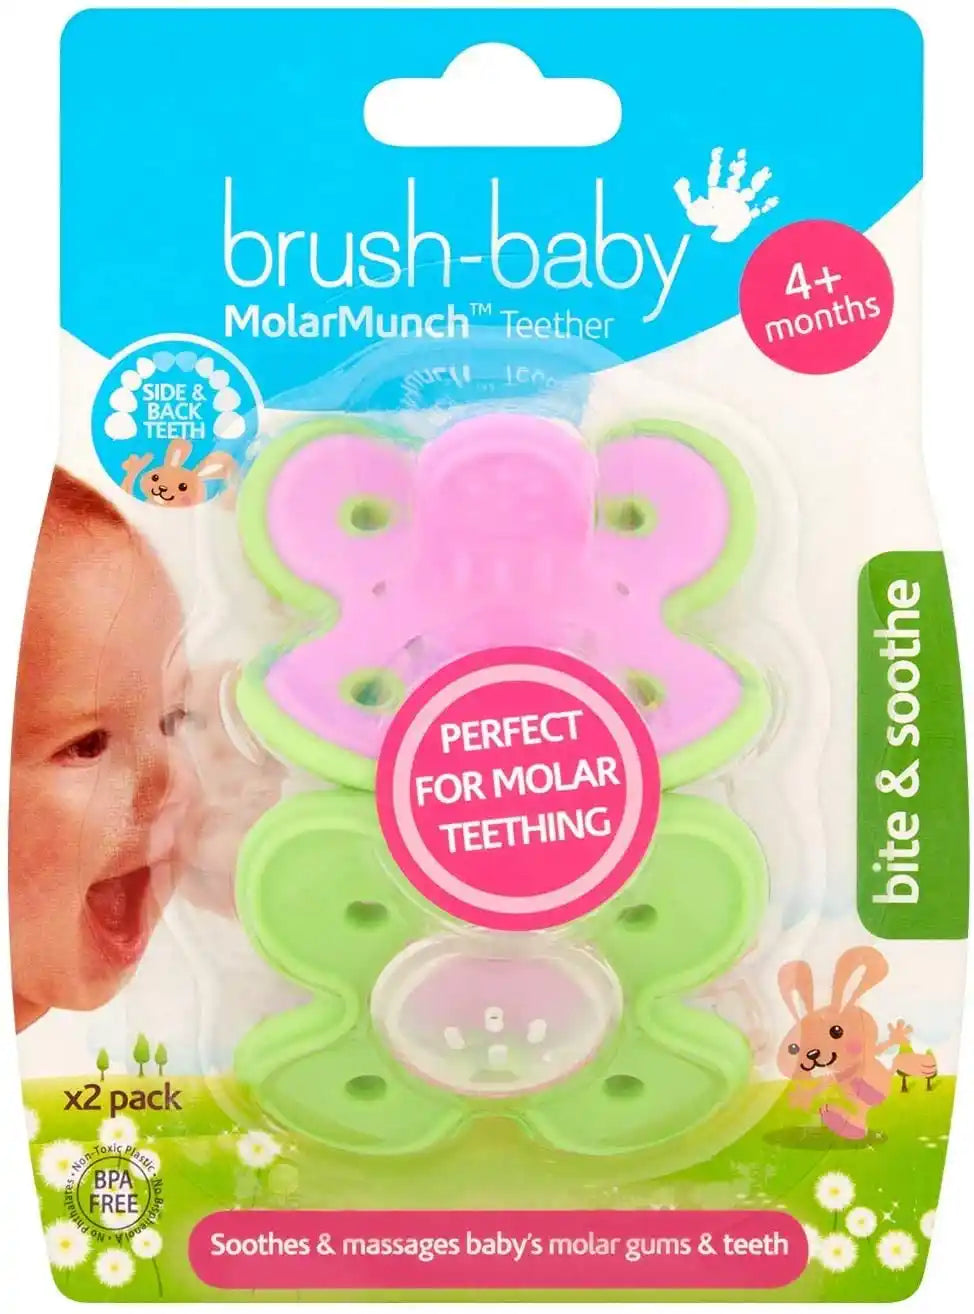 Brush-Baby Molarmunch X 2 Teether (Green/Pink)